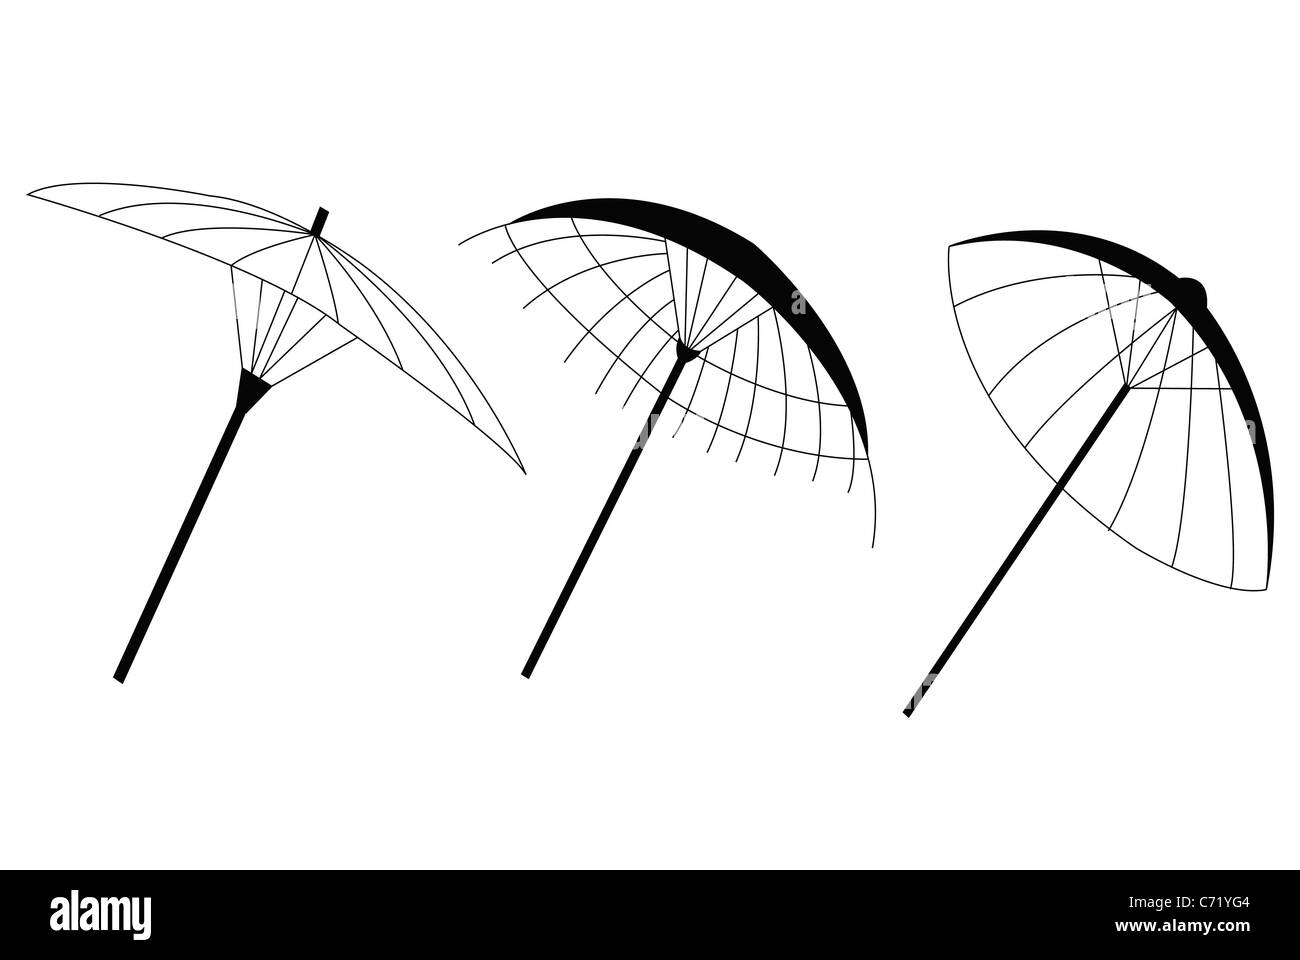 Illustration of three umbrellas Stock Photo